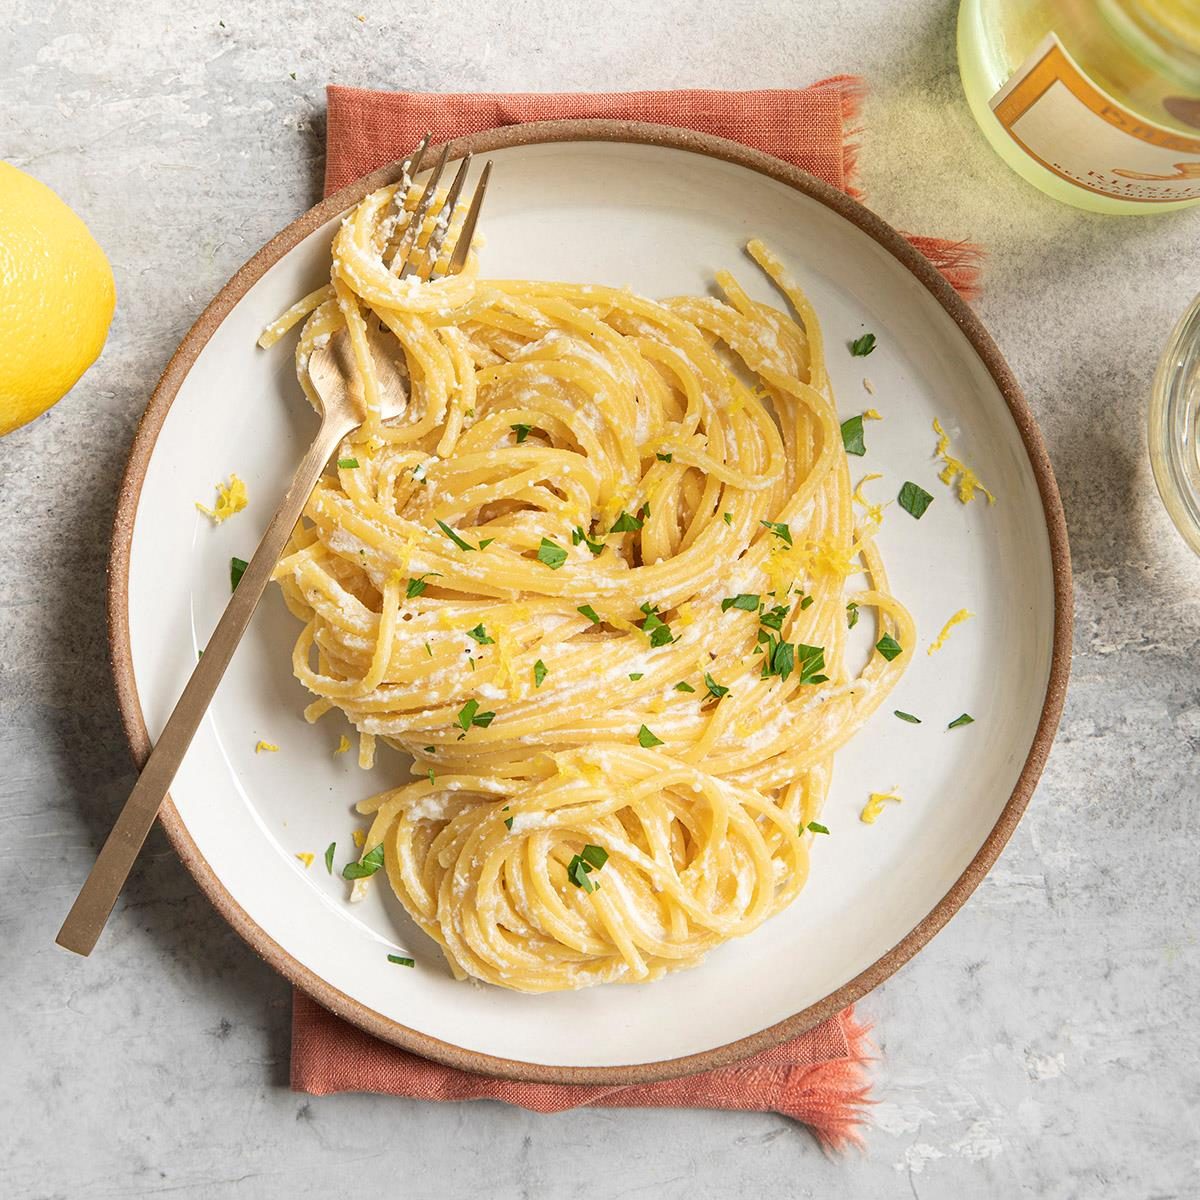 Lemon Ricotta Pasta Recipe: How to Make It